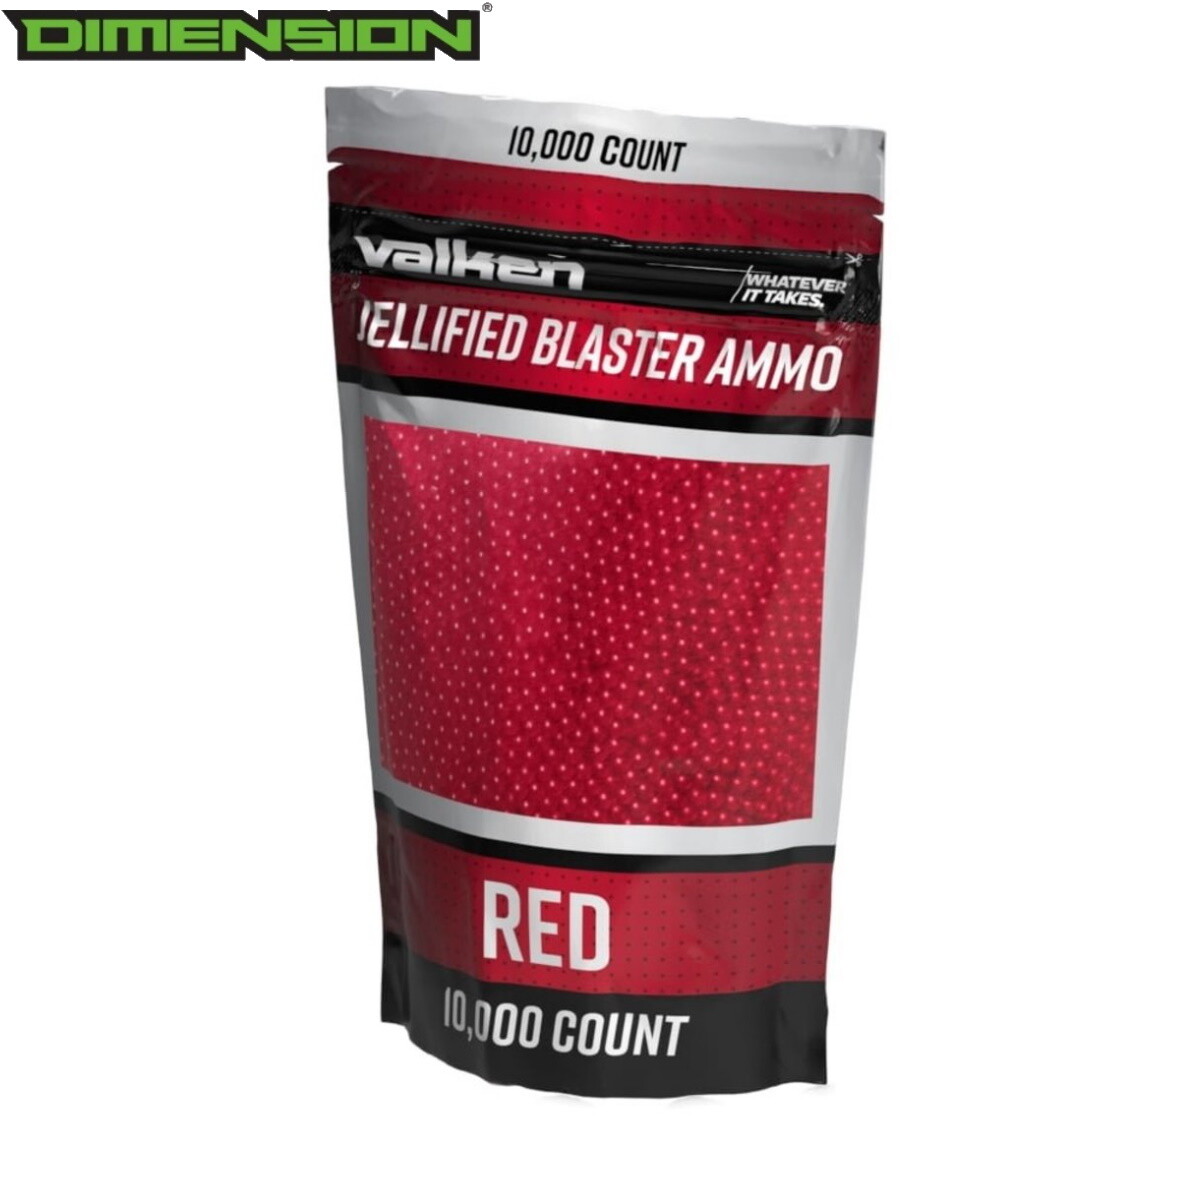 Valken Jellified Blaster Ammo -10,000rds - Red